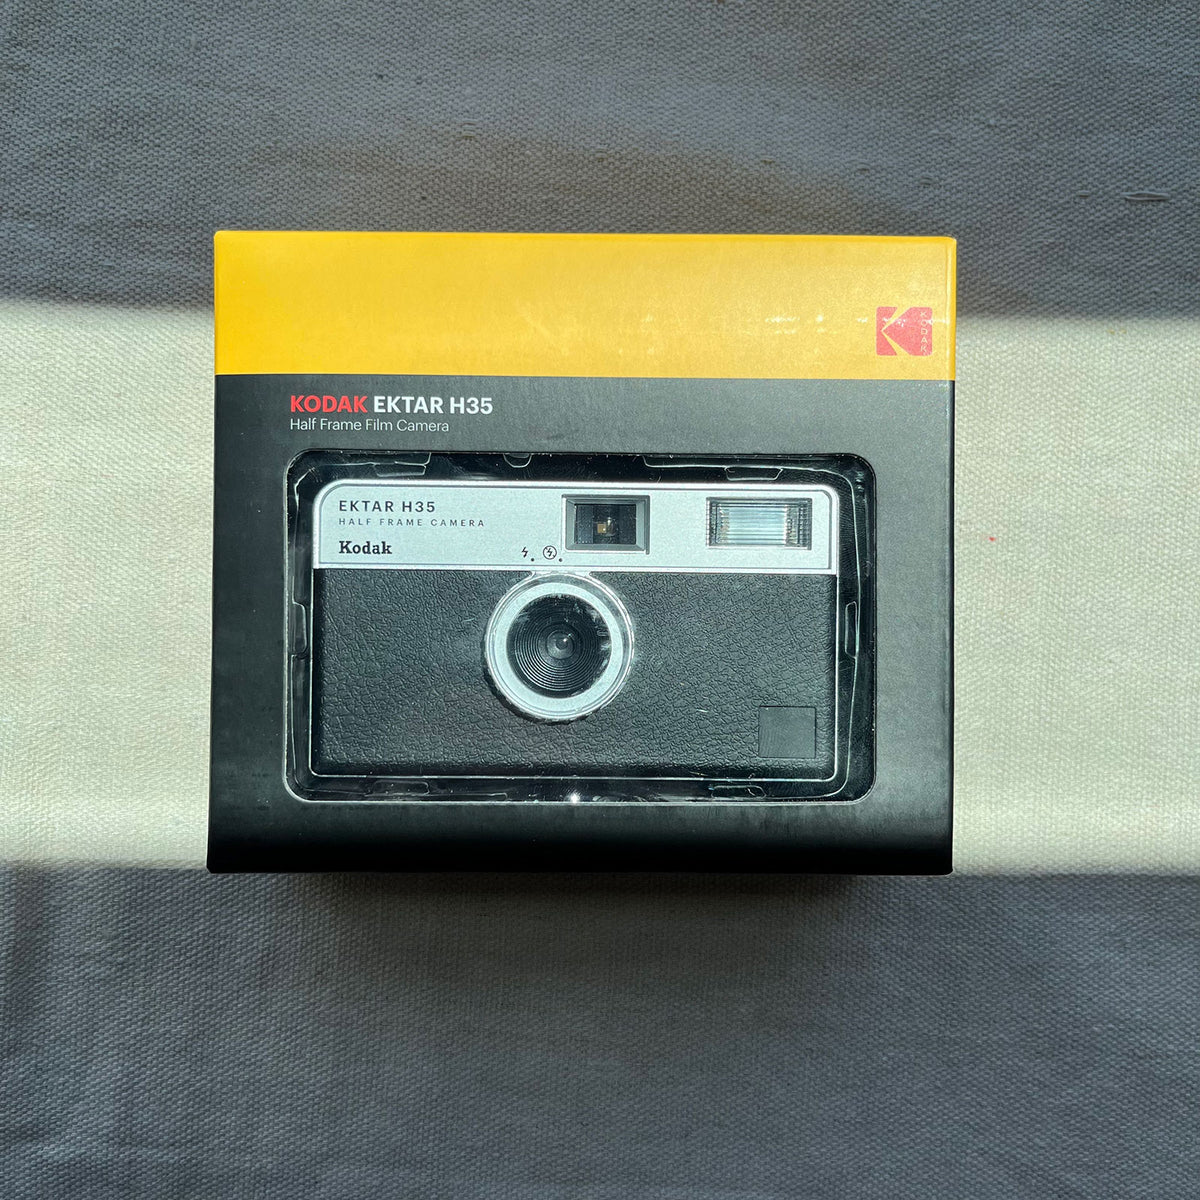 Kodak FunSaver Camera 27 exp. – Treehouse Analog Selects